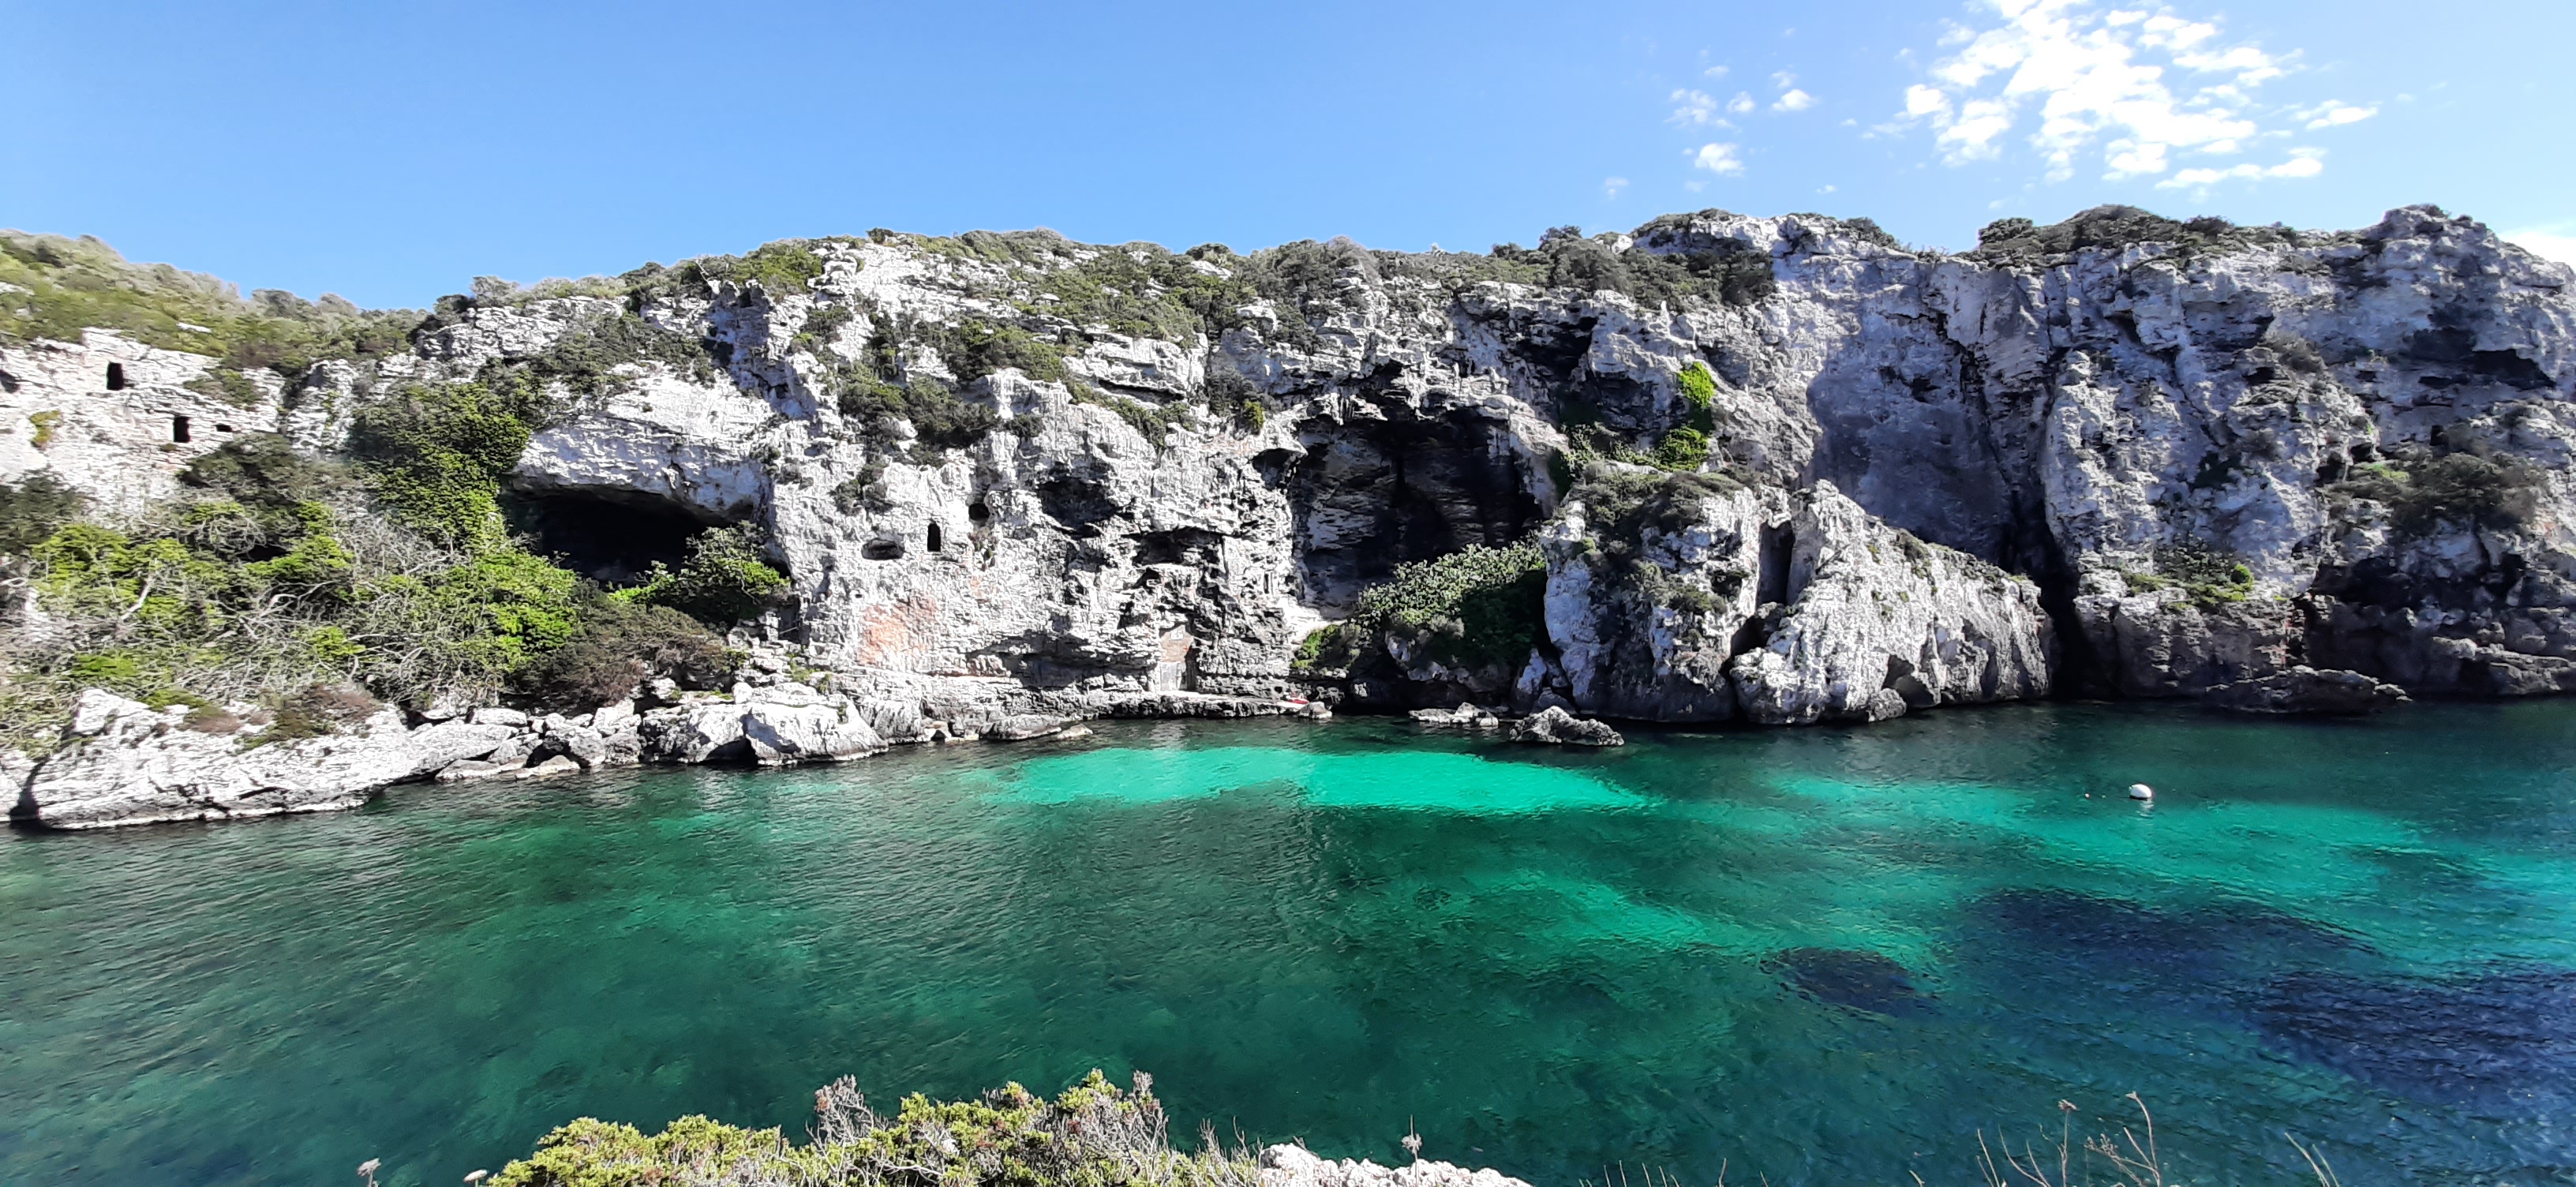 Cales Coves, Menorca, 4 mayo 2021